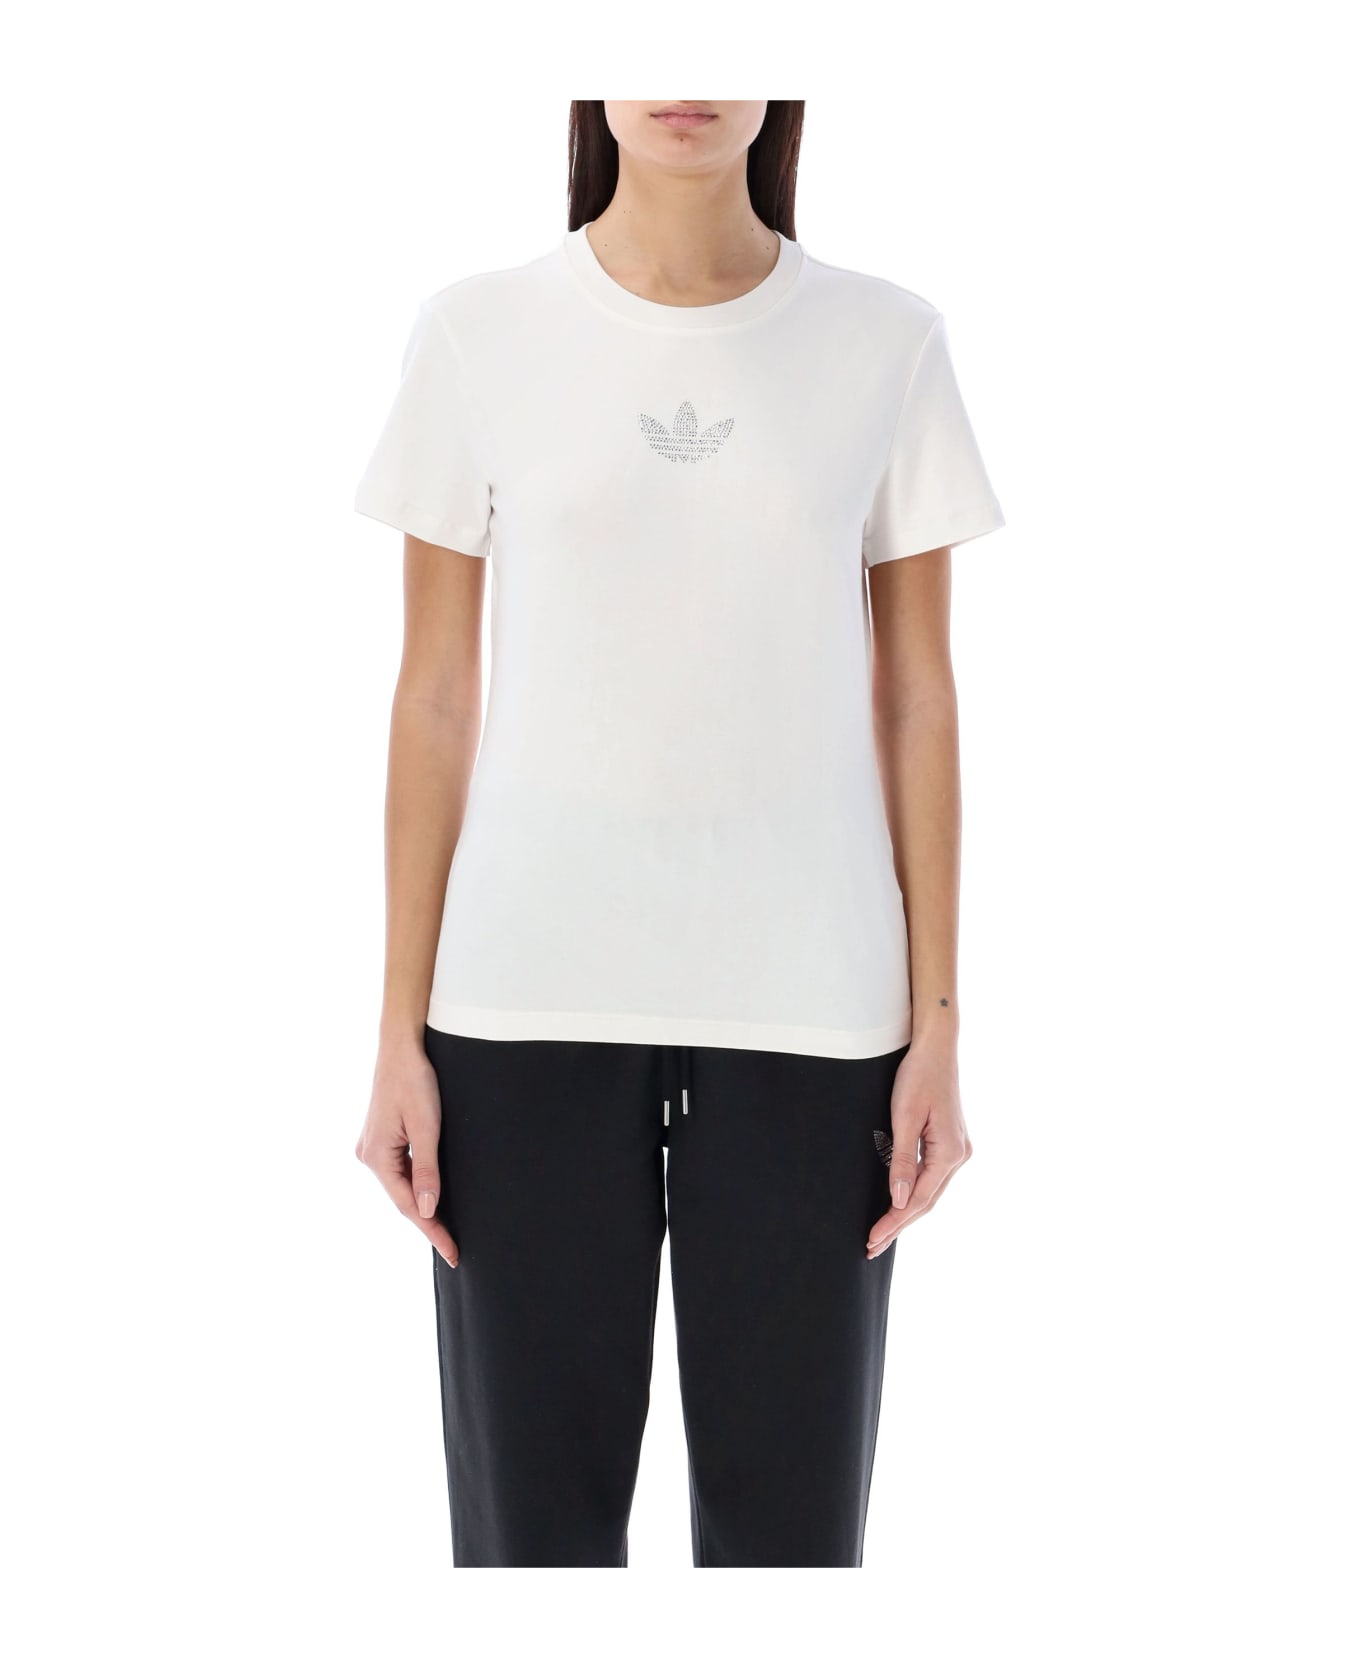 Adidas Originals Crystal Tee - WHITE Tシャツ